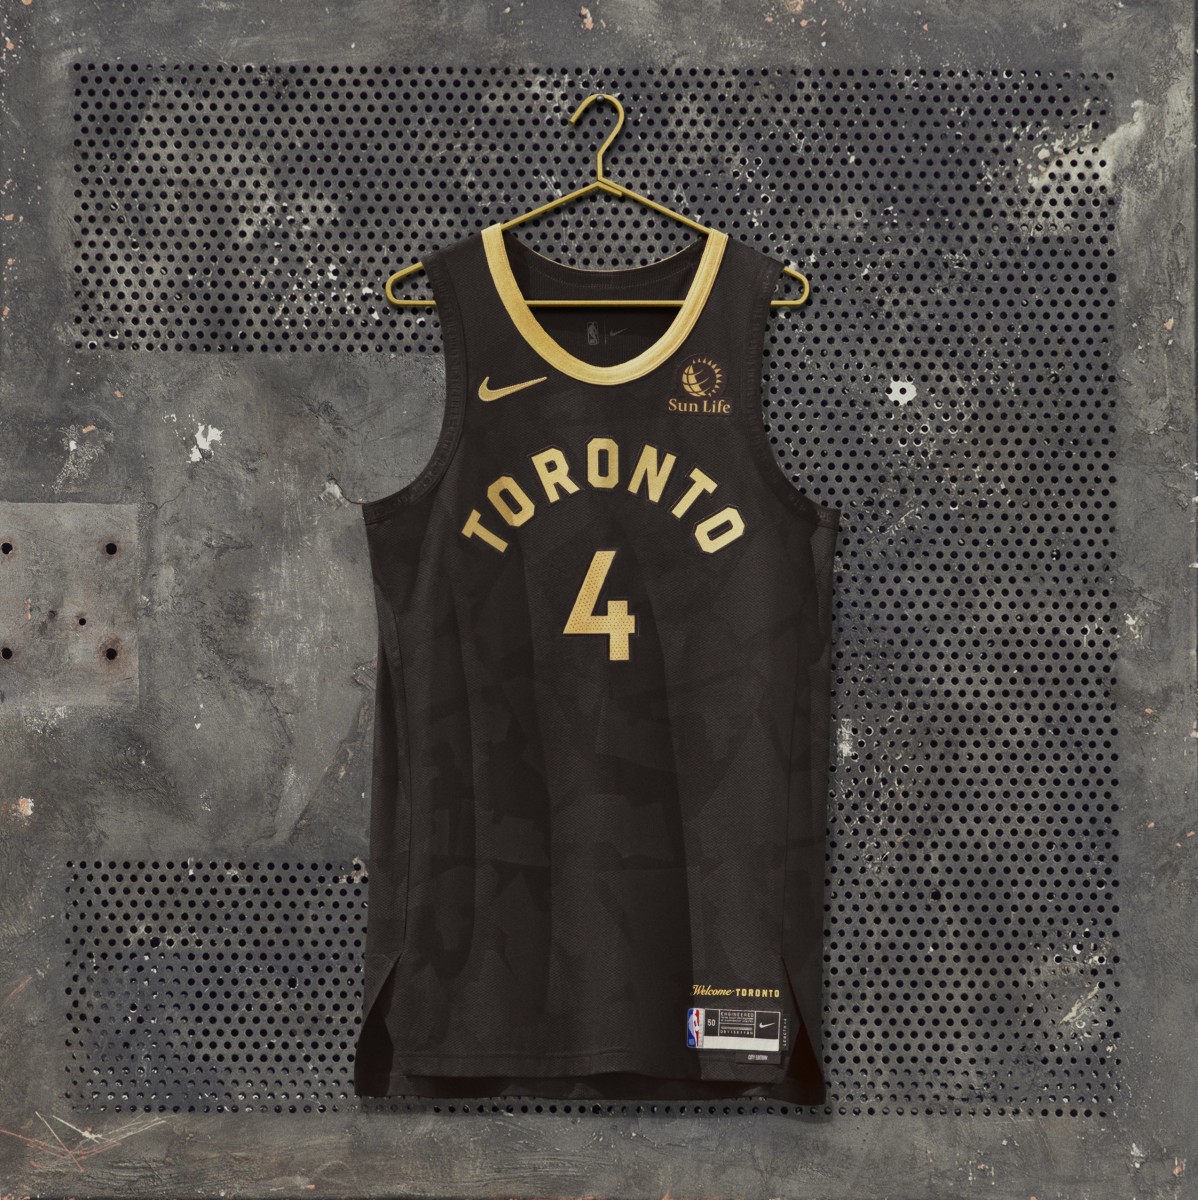 Back in Black and Gold… Again, Raptors Unveil 2021 City Uniform